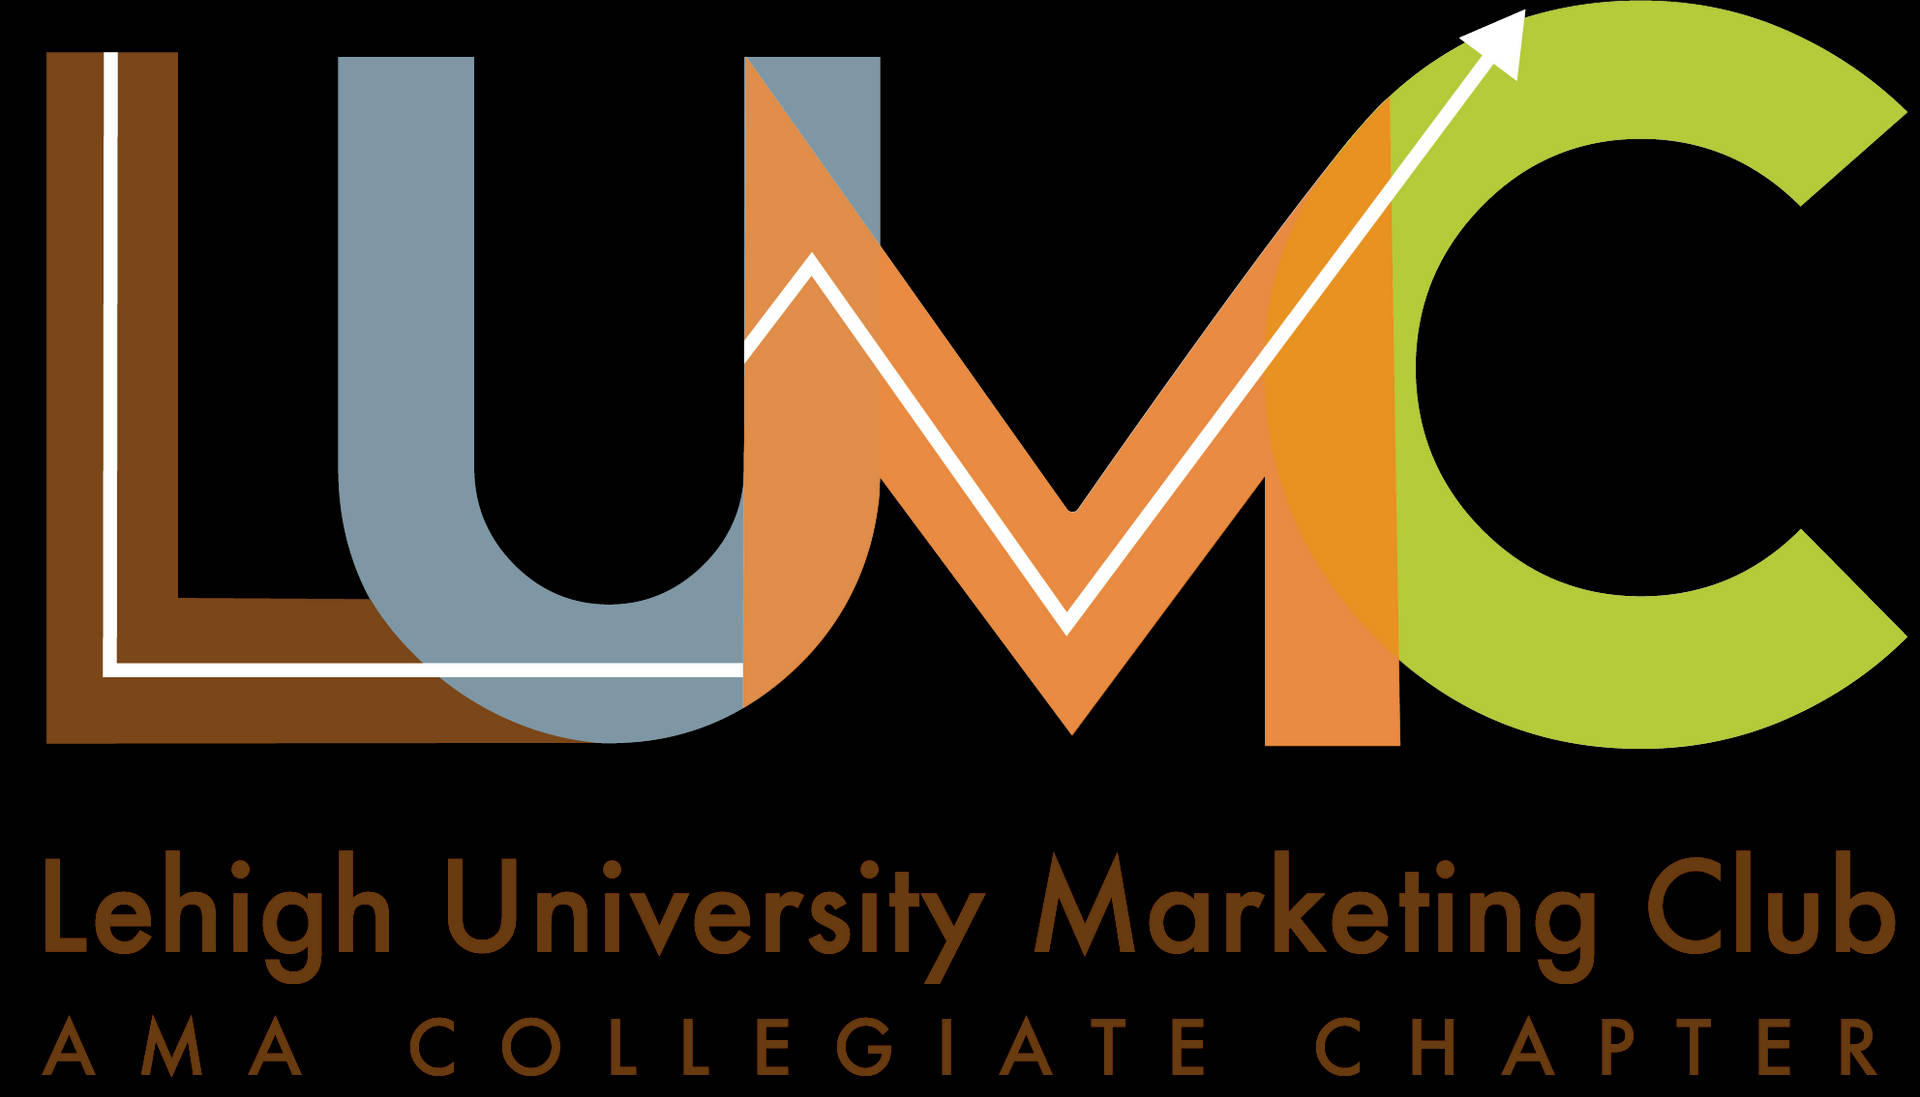 Lehigh University Marketing Club Logo Wallpaper